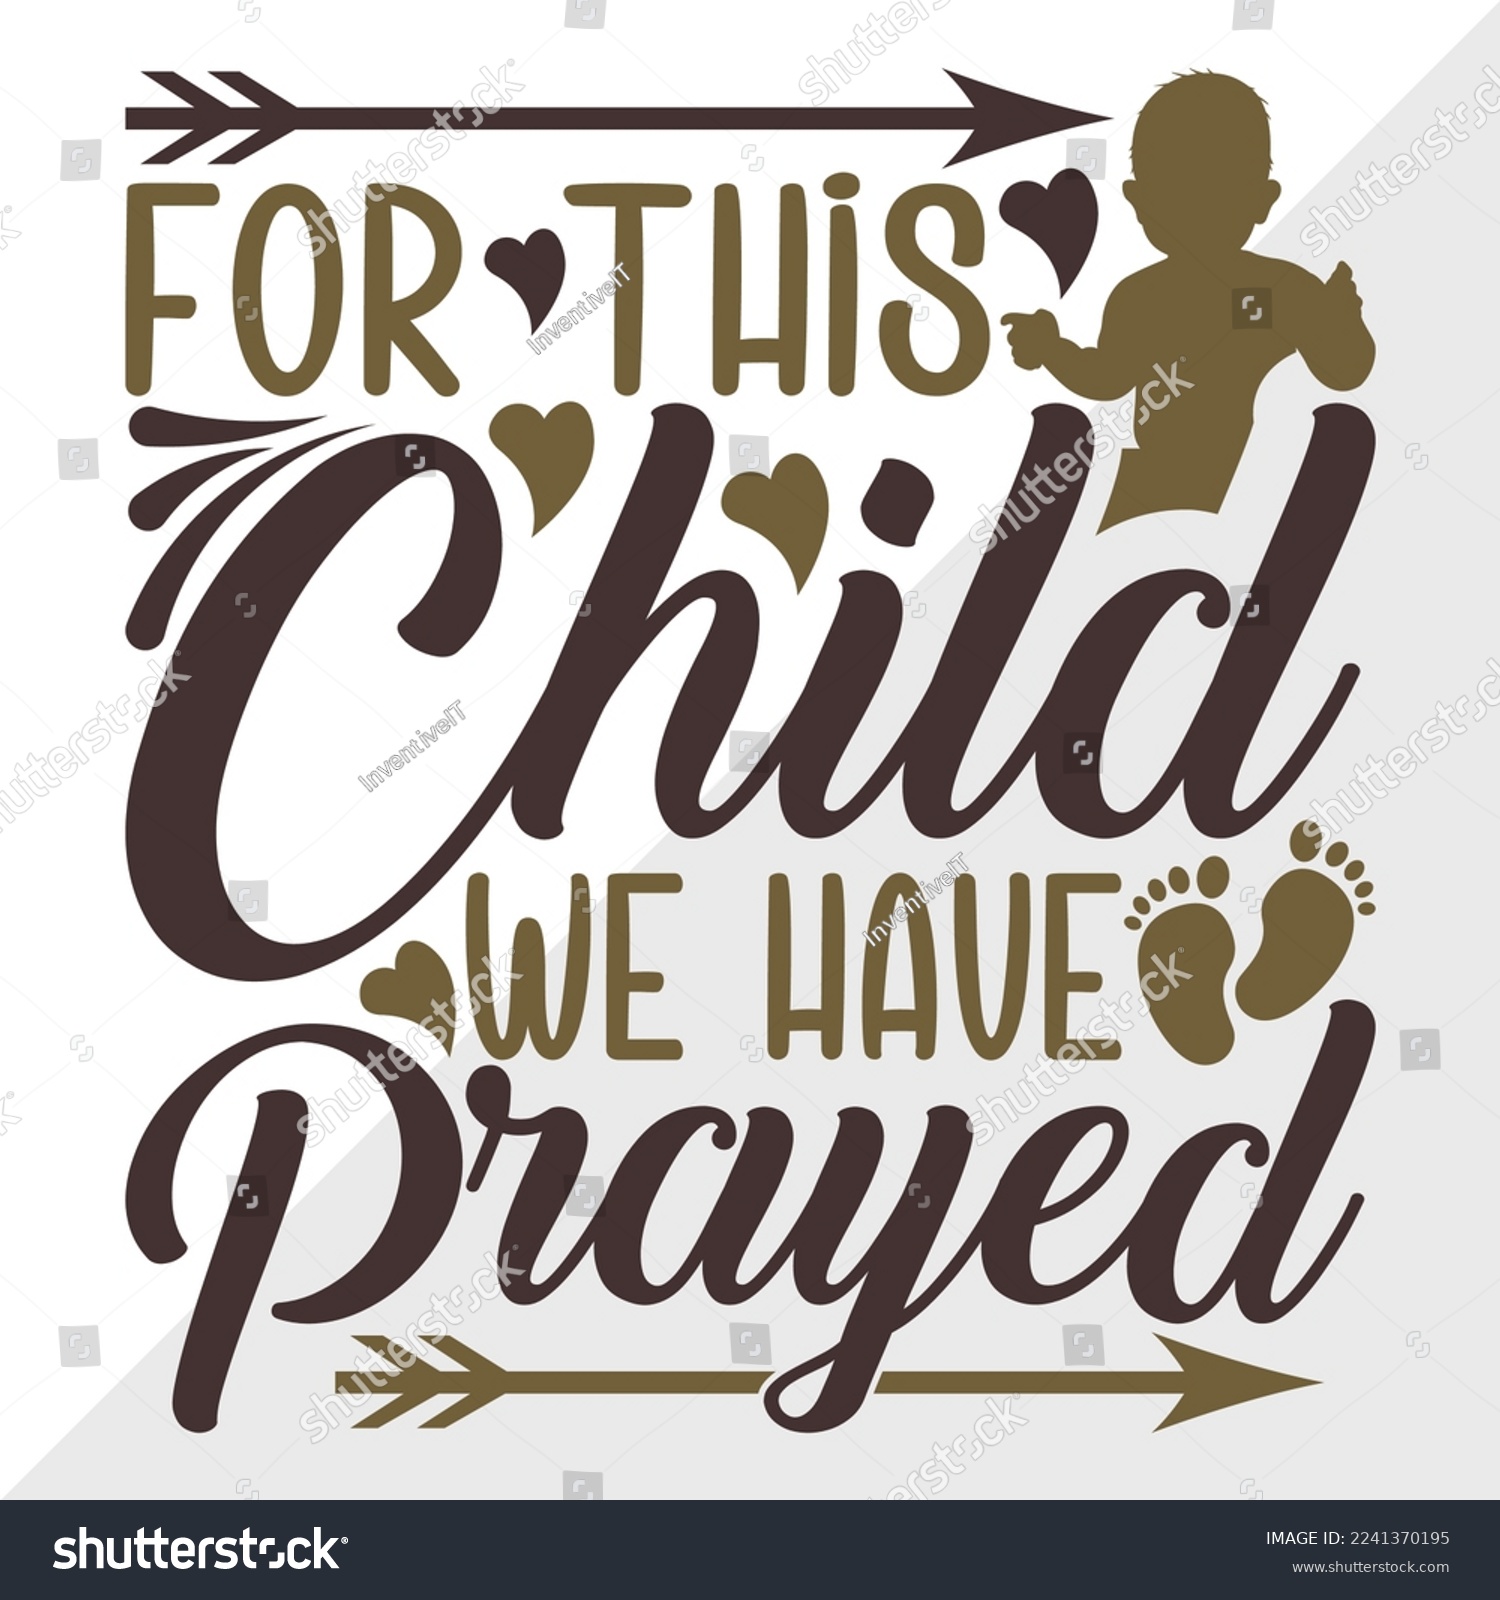 SVG of For This Child We Have Prayed SVG Printable Vector Illustration svg